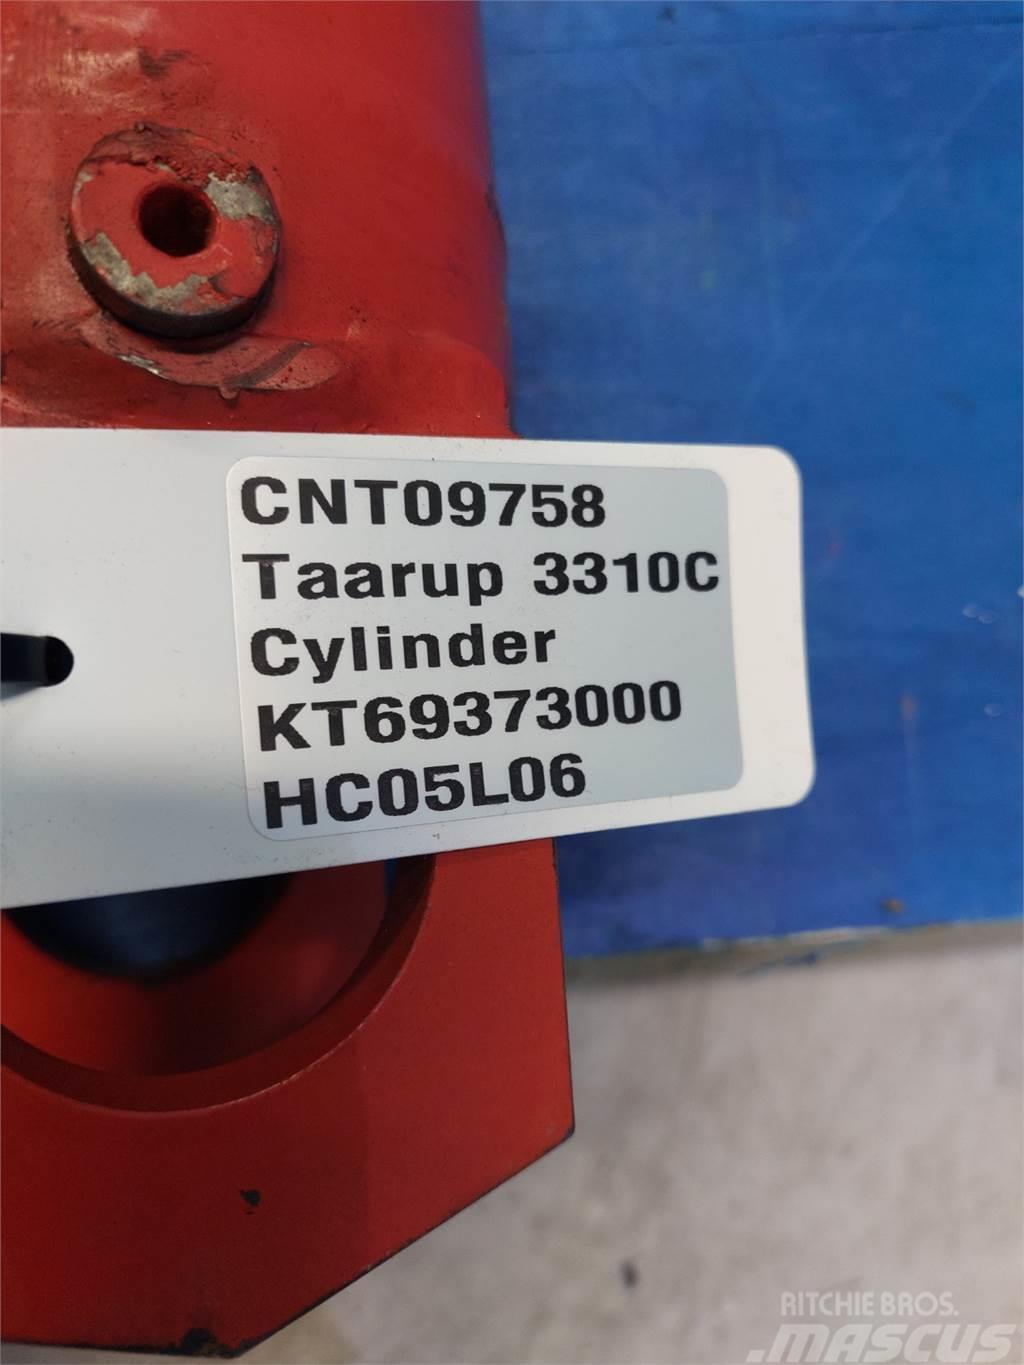 Taarup 3310C Cylinder KT 69373000 Maaiers